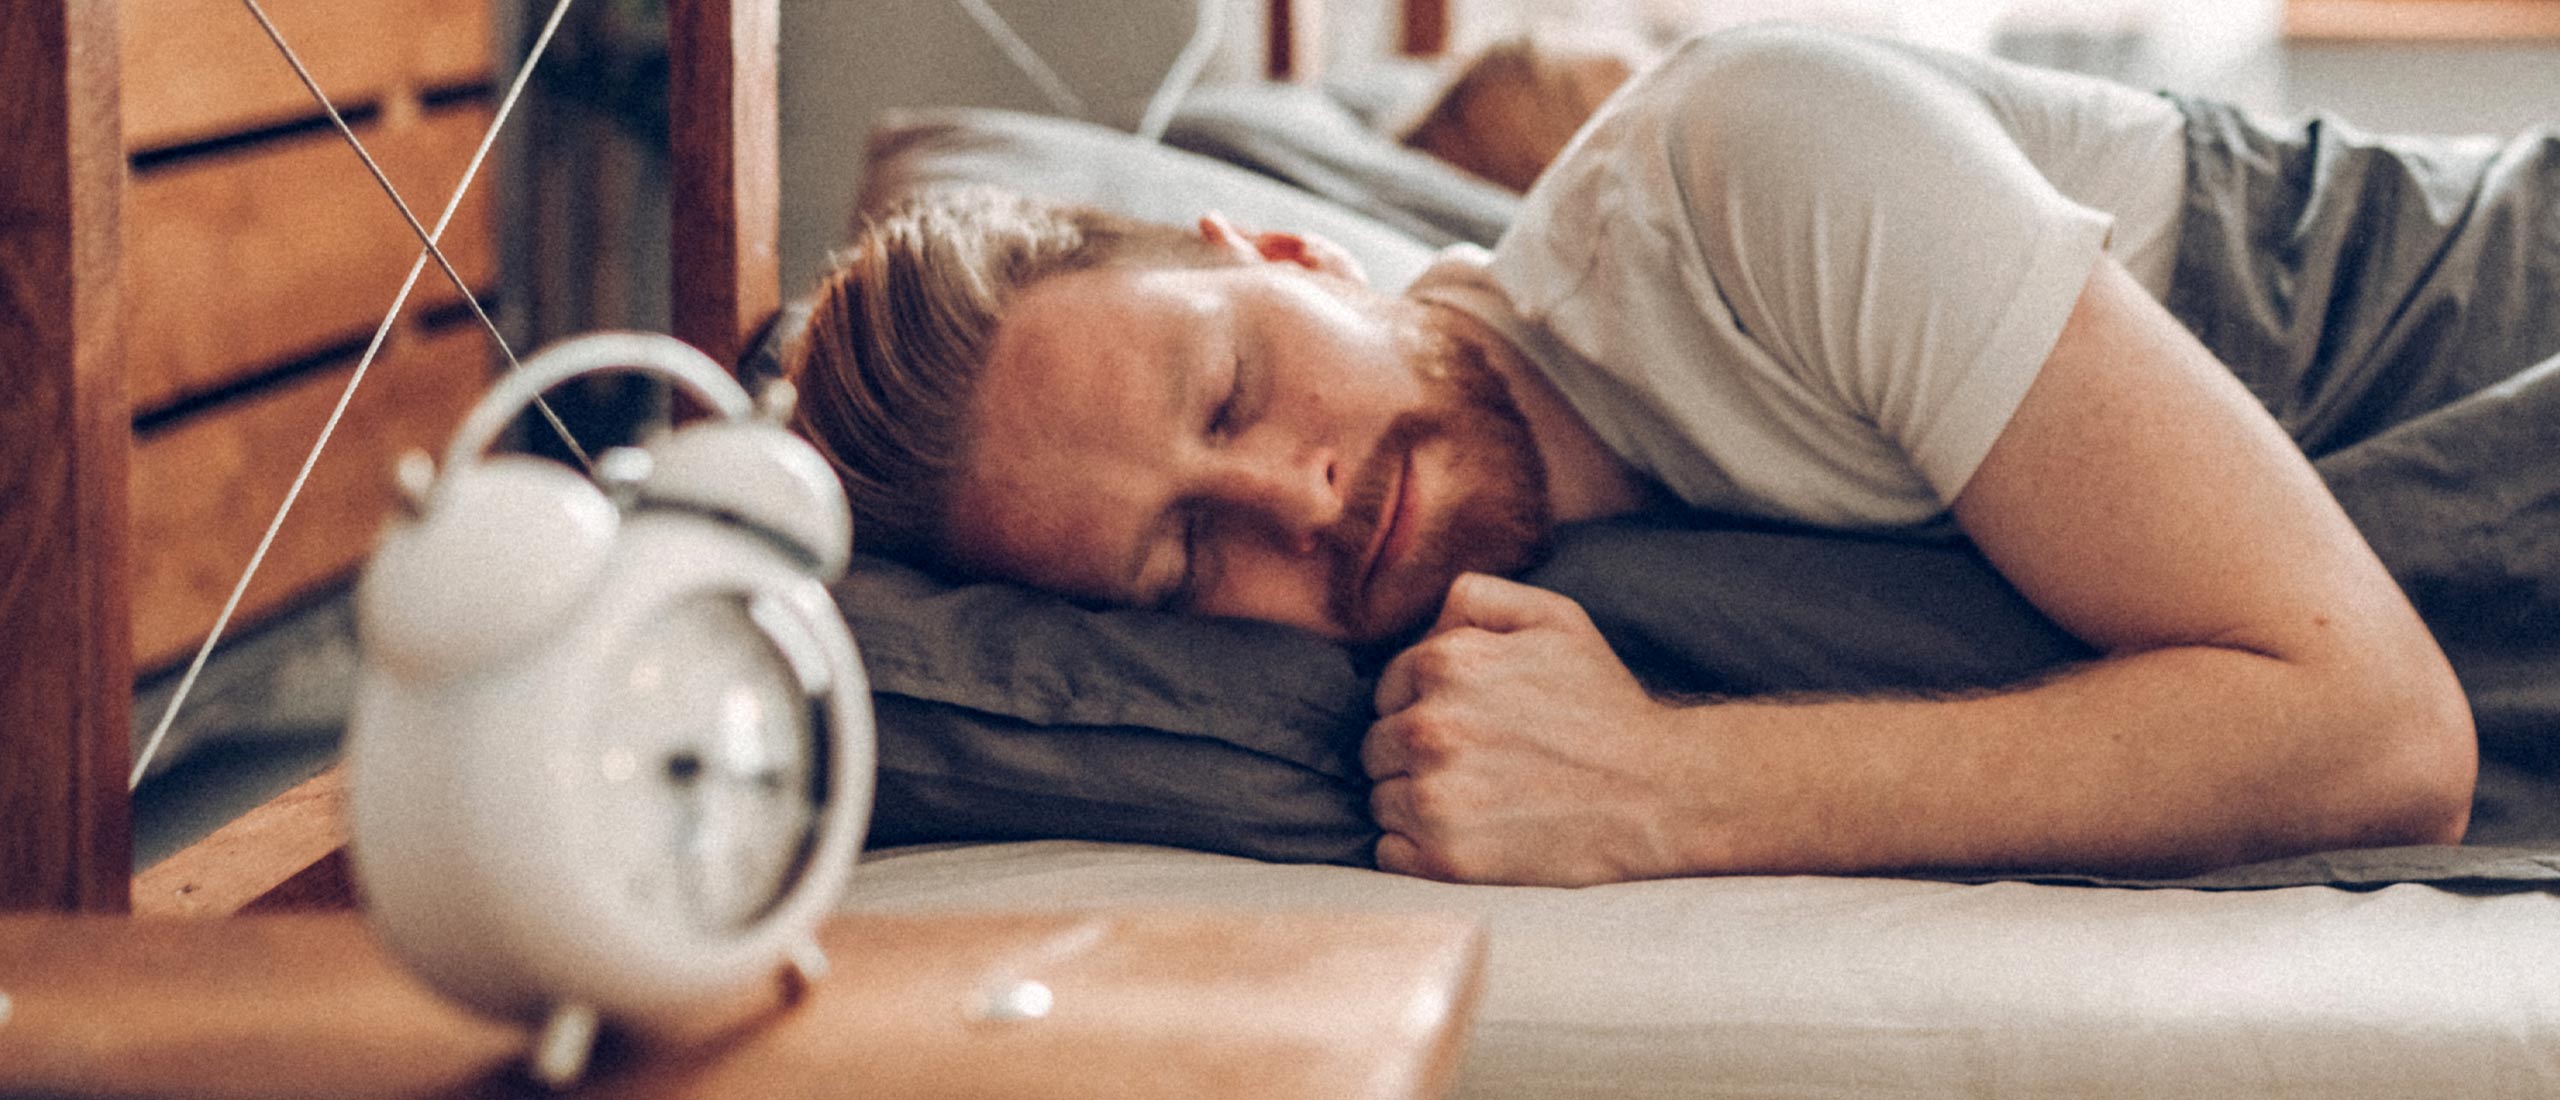 man sleeping on his side next to alarm clock